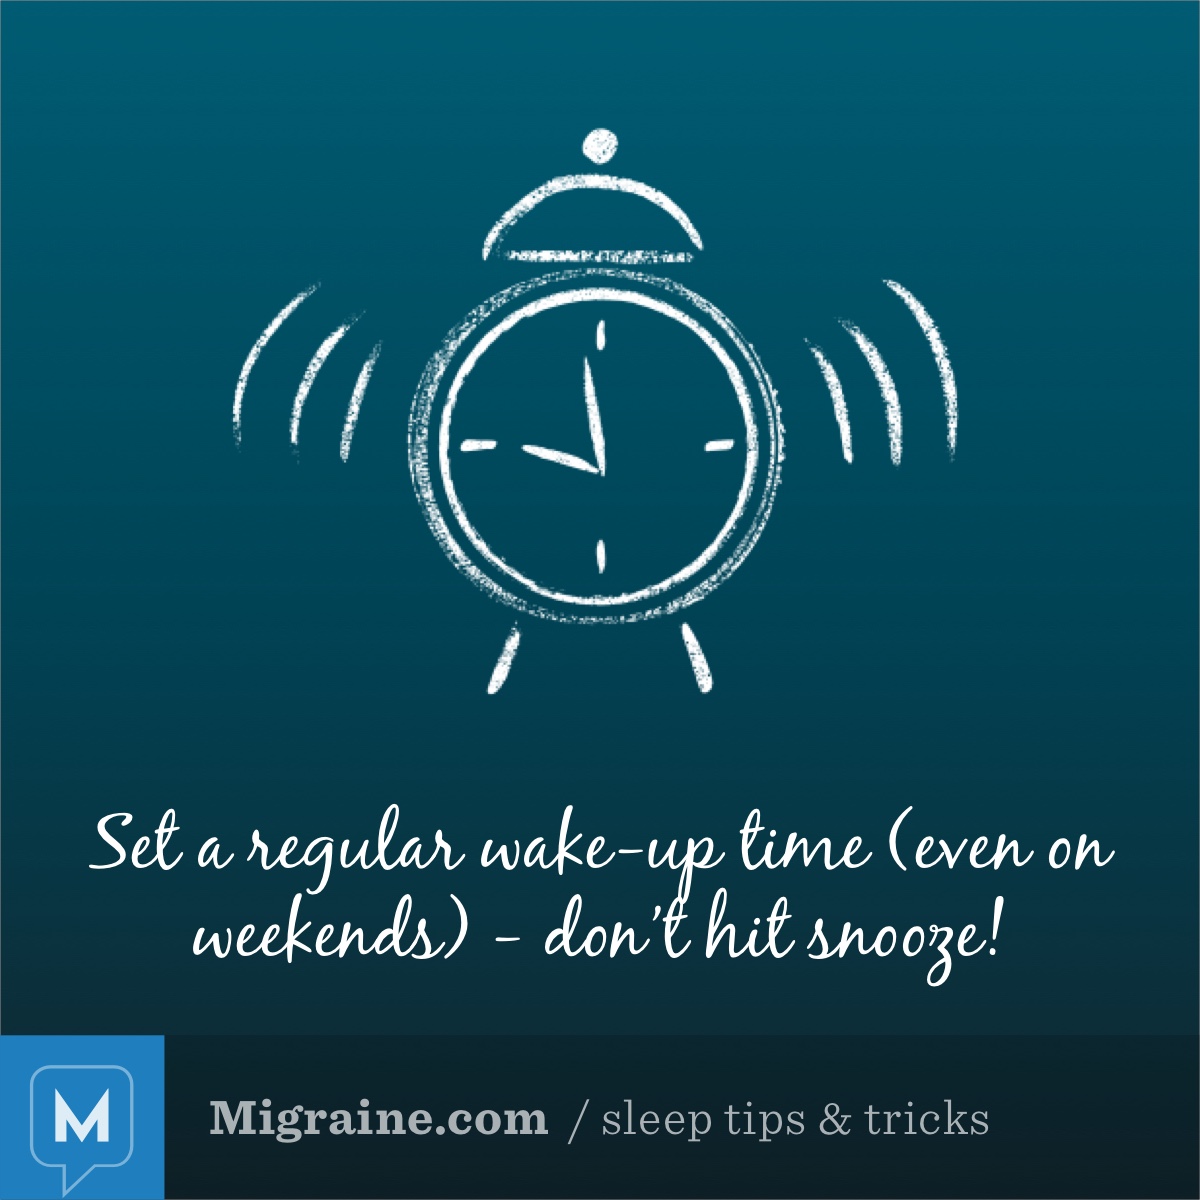 Sleep tips and tricks